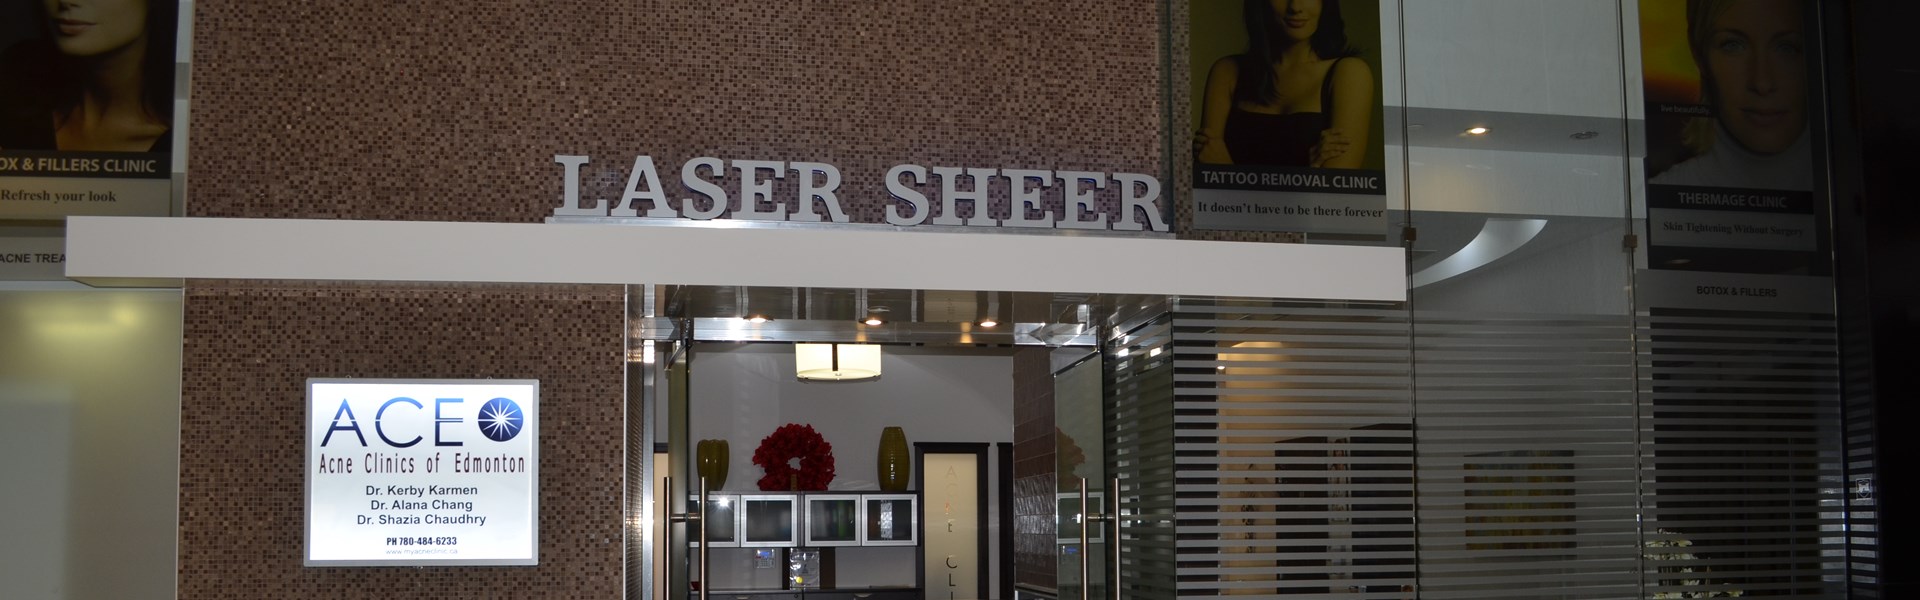 Laser Sheer